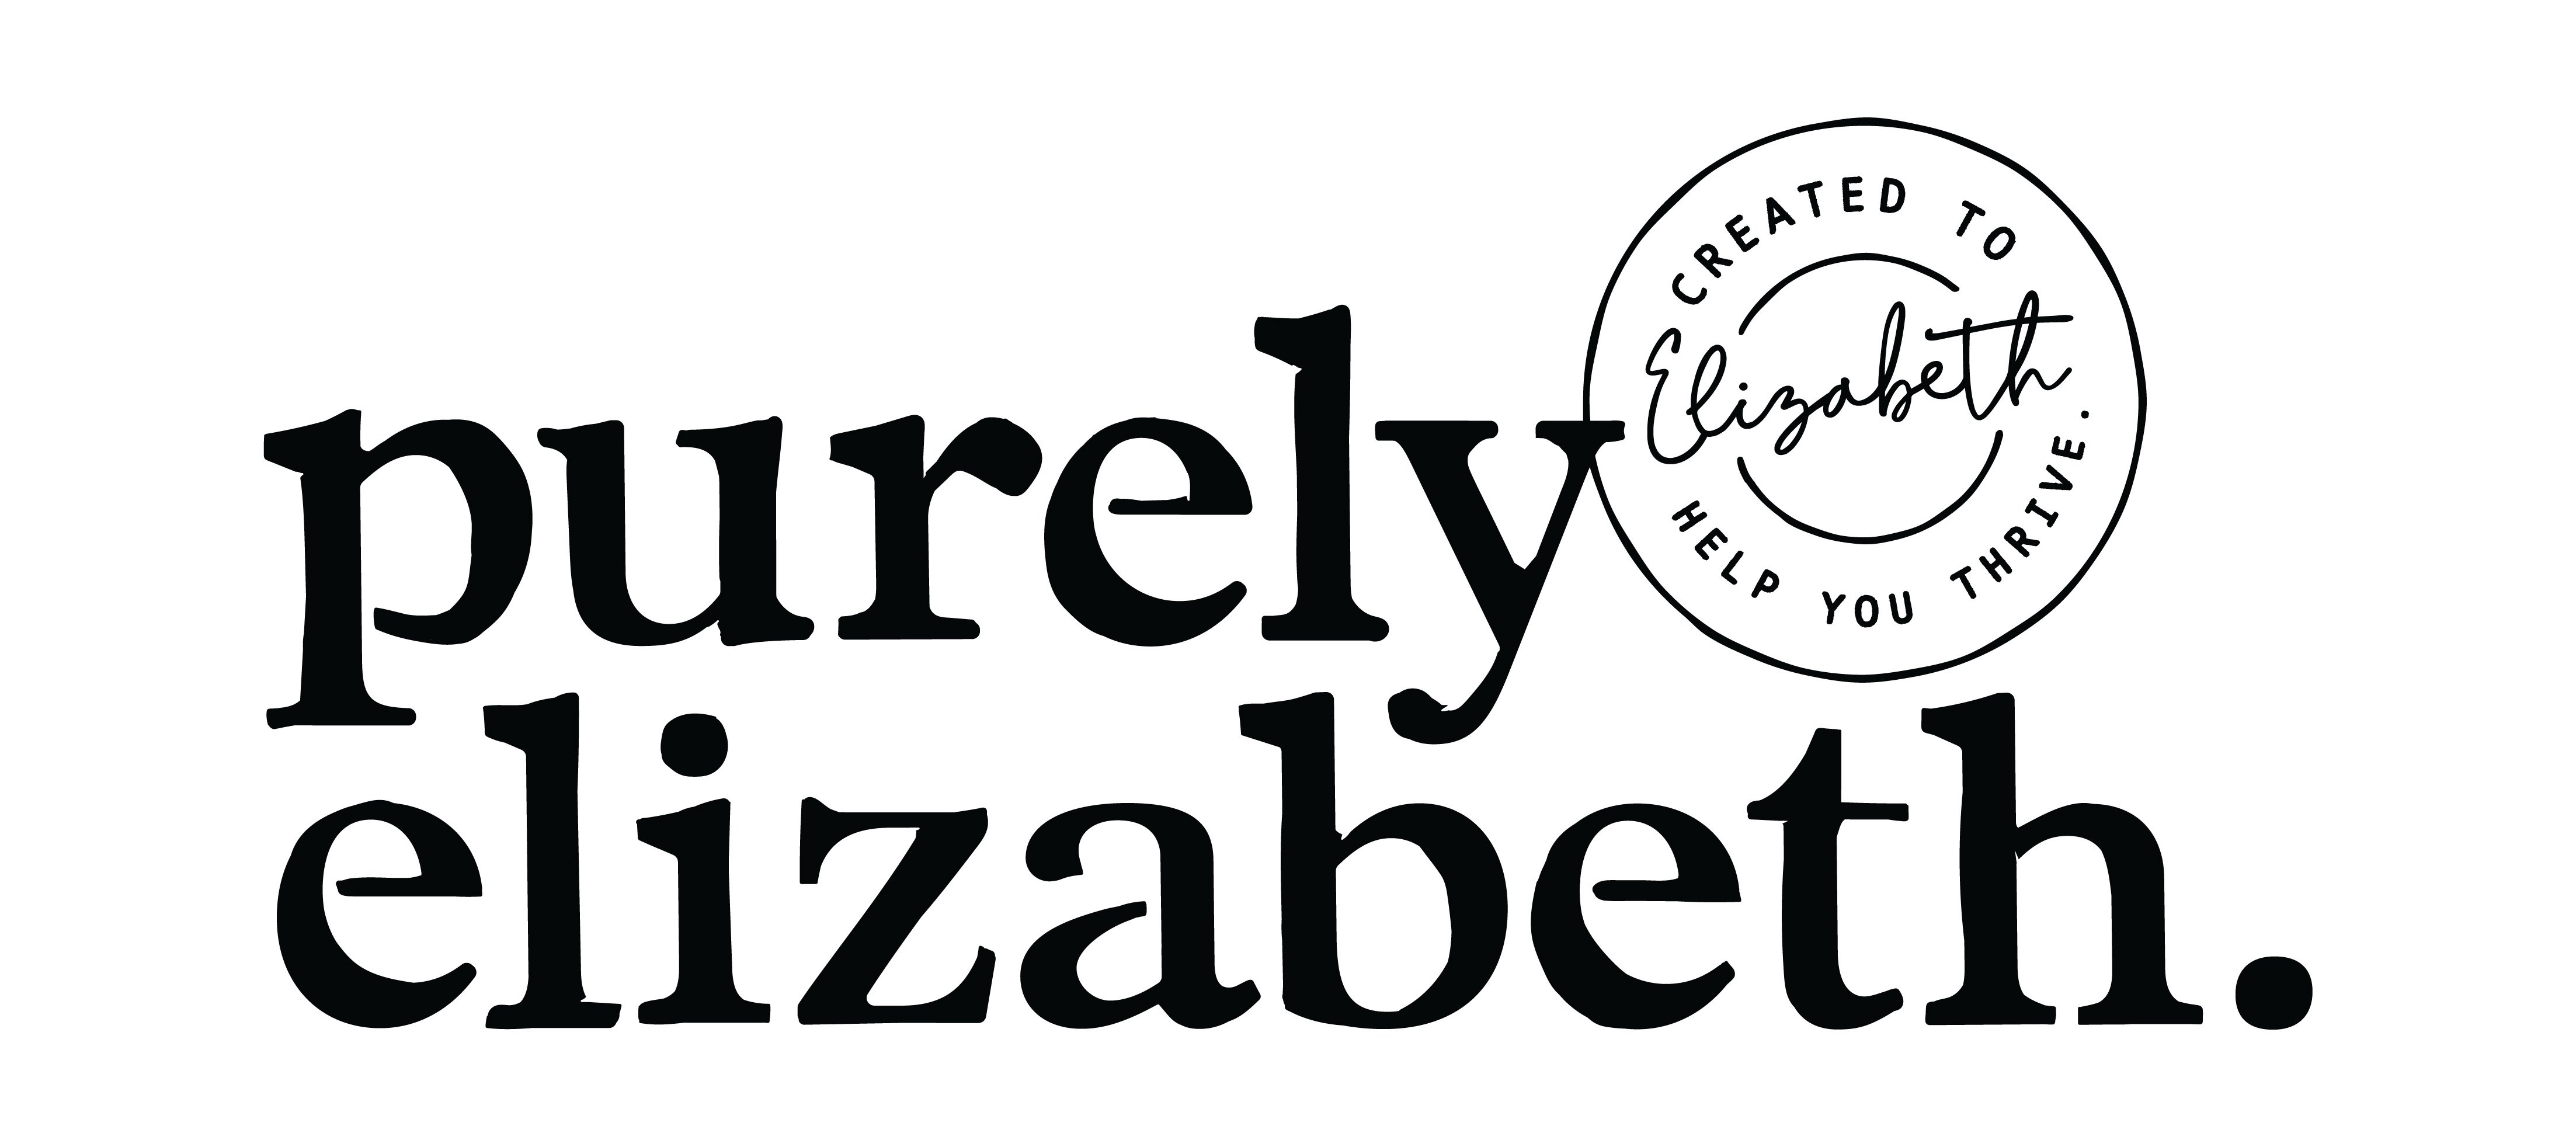  PURELY ELIZABETH ELIZABETH CREATED TO HELP YOU THRIVE